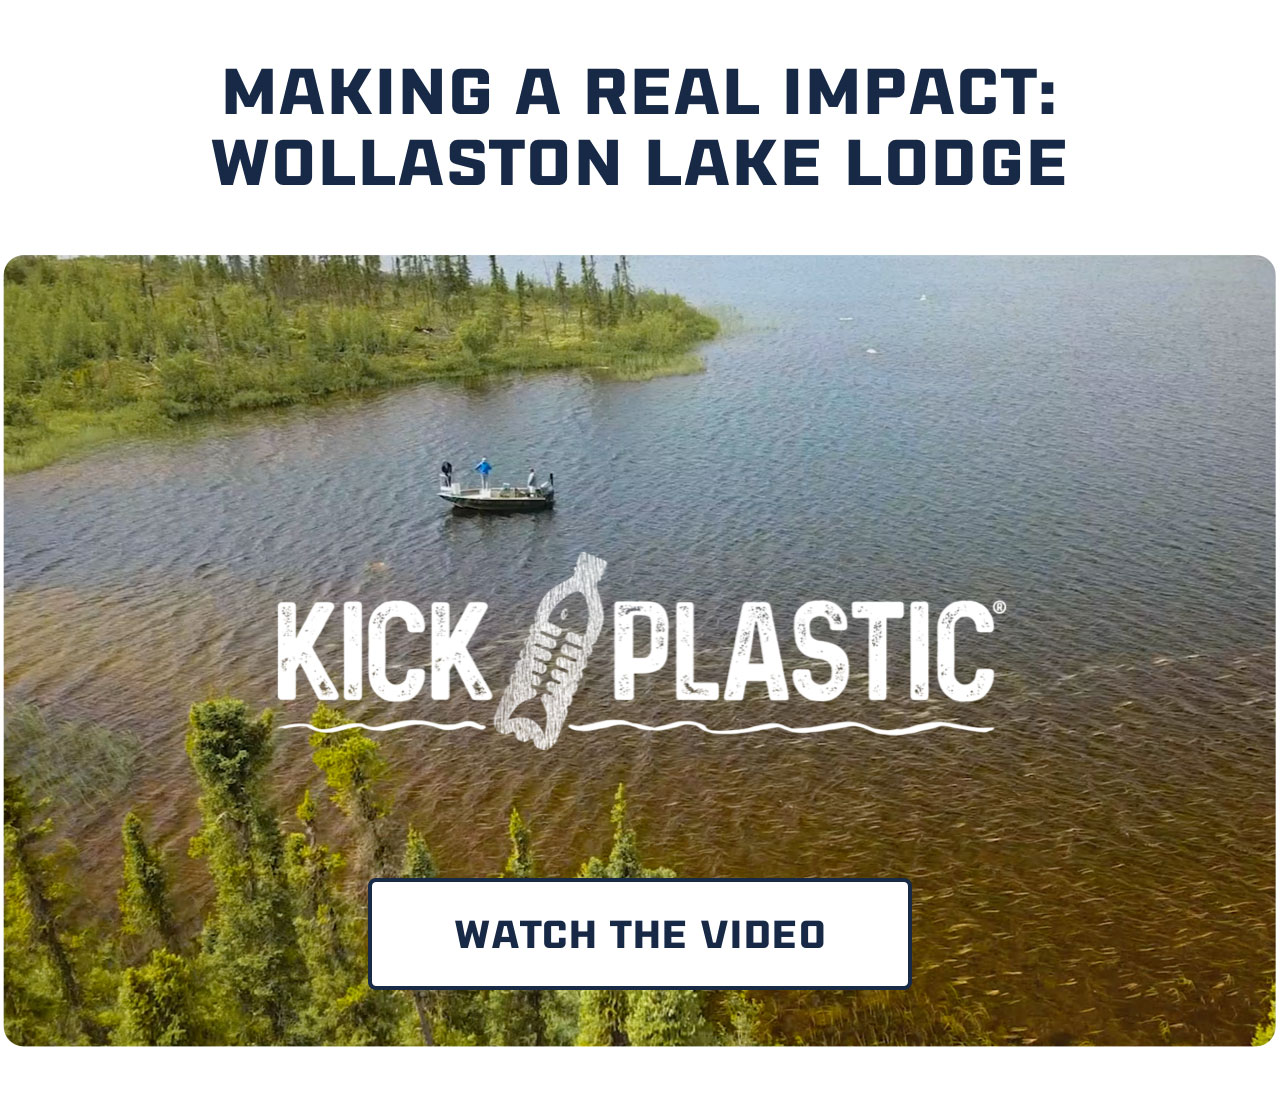 

MAKING A REAL IMPACT
WOLLASTON LAKE LODGE

KICK PLASTIC

[ WATCH THE VIDEO ]

									